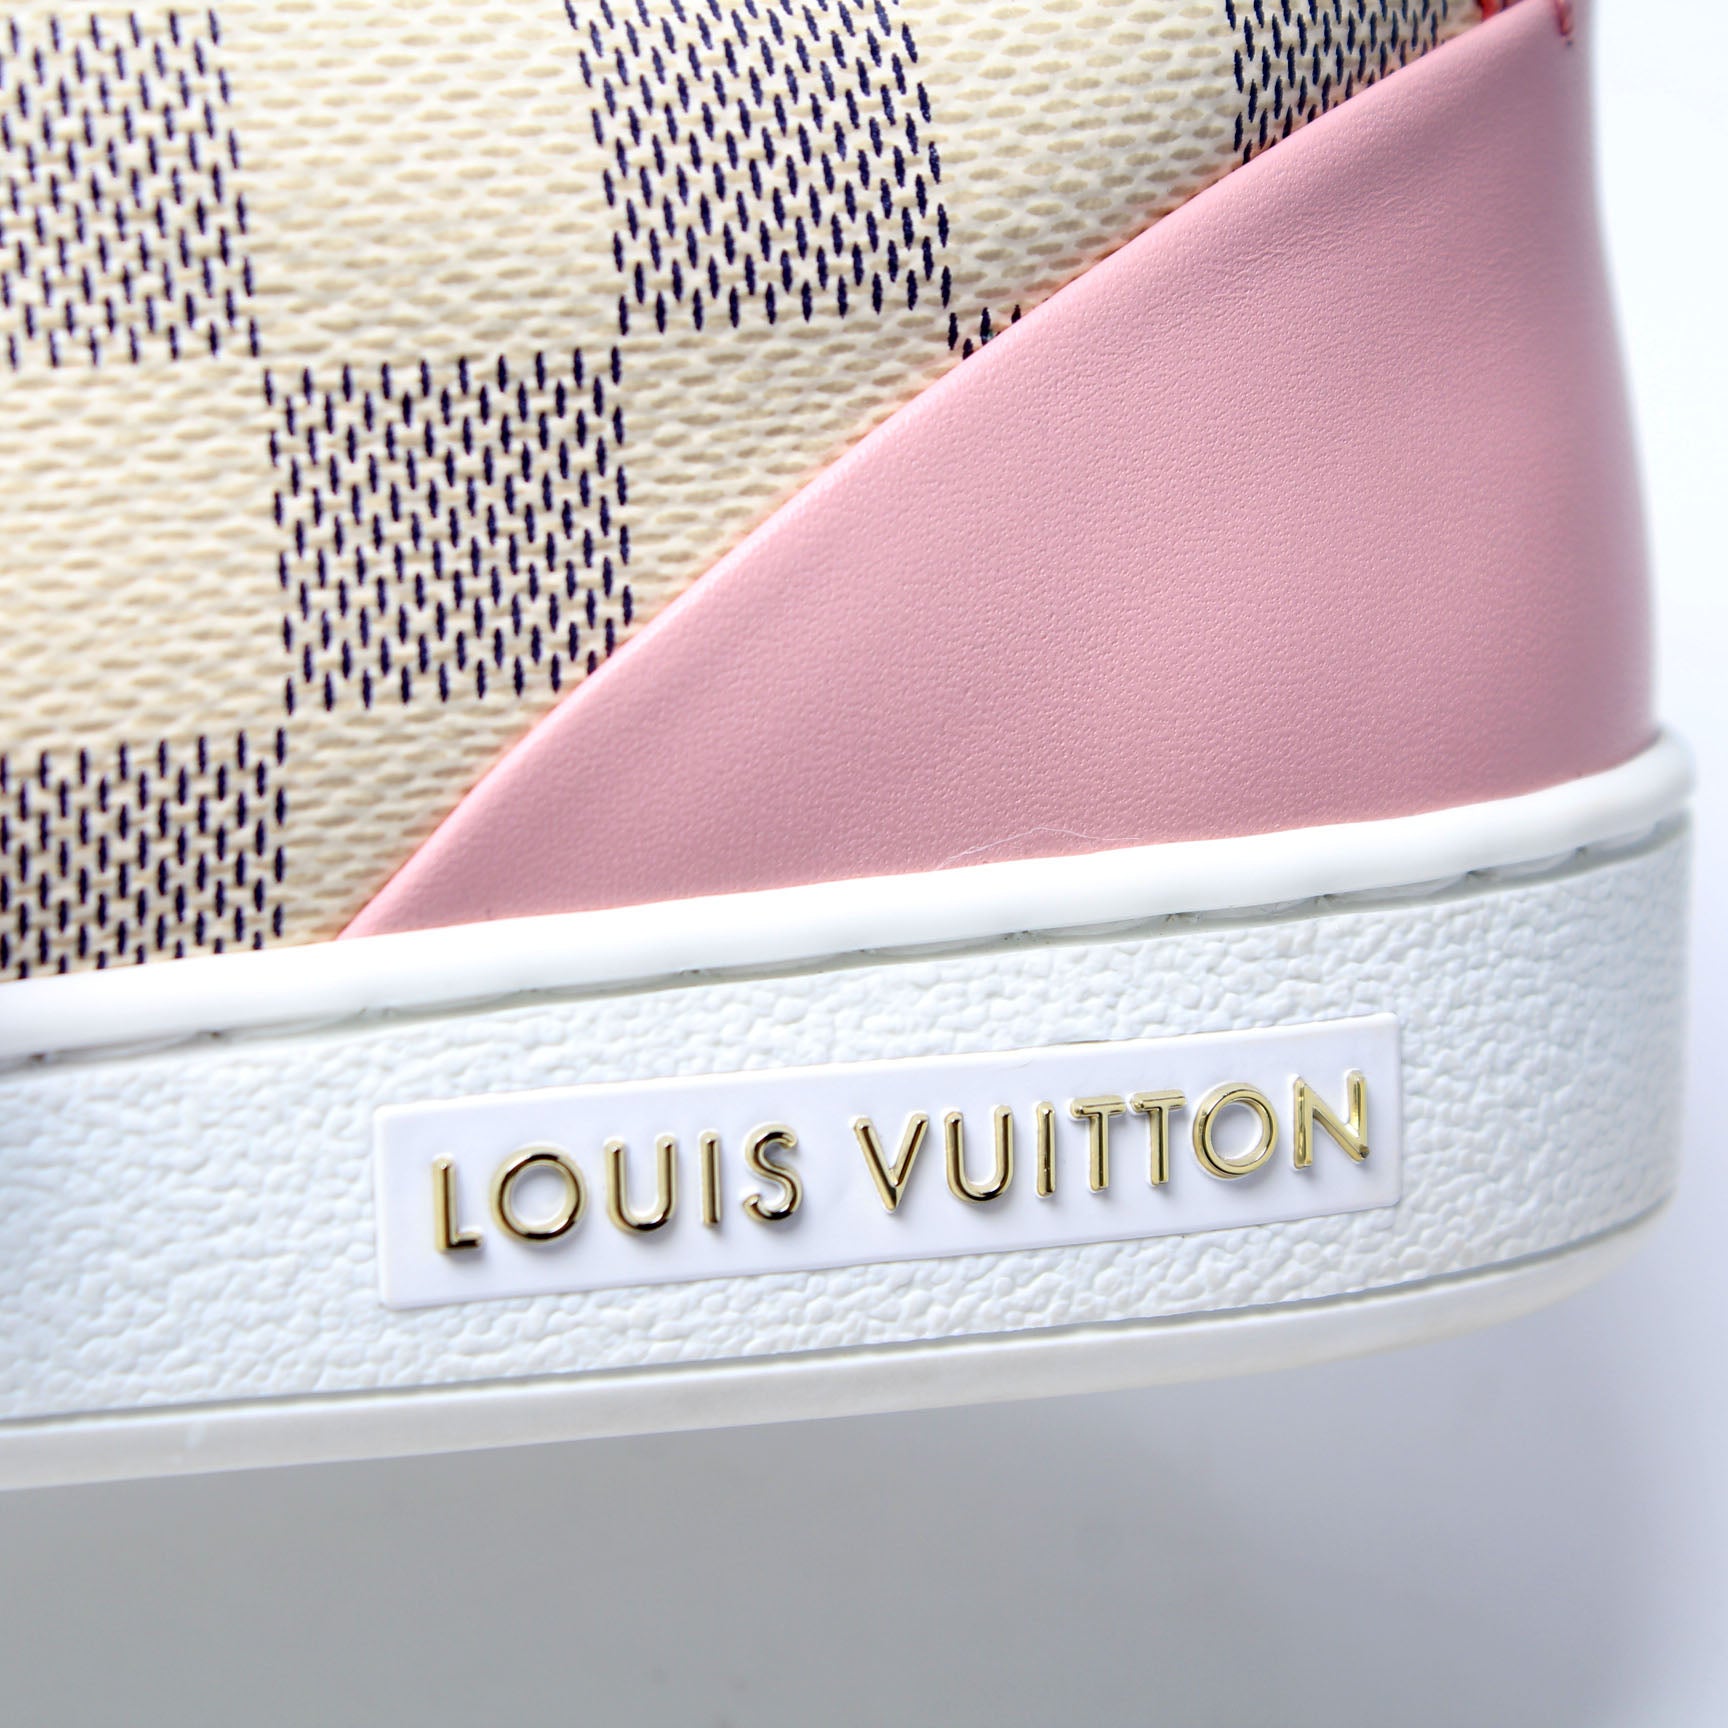 LOUIS VUITTON Damier Azur Summer Trunks Frontrow Sneakers 37 262164